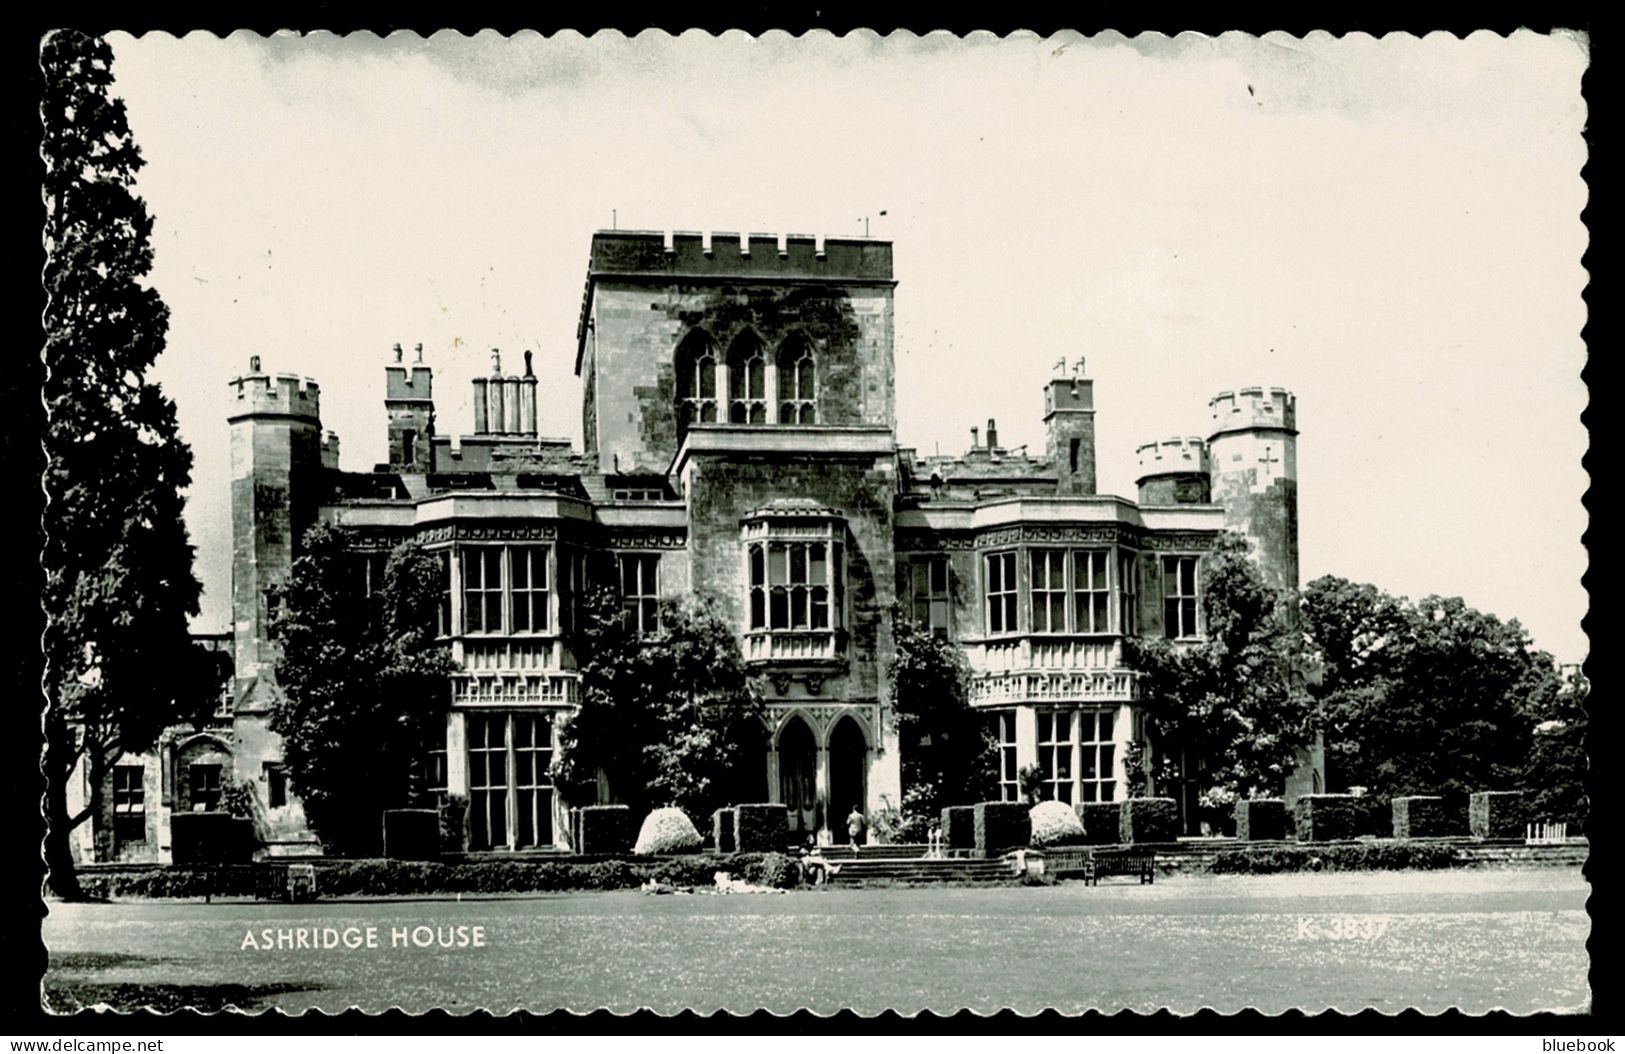 Ref 1629 - 1964 Real Photo Postcard - Ashridge House - Berkhamsted Hertfordshire - Hertfordshire